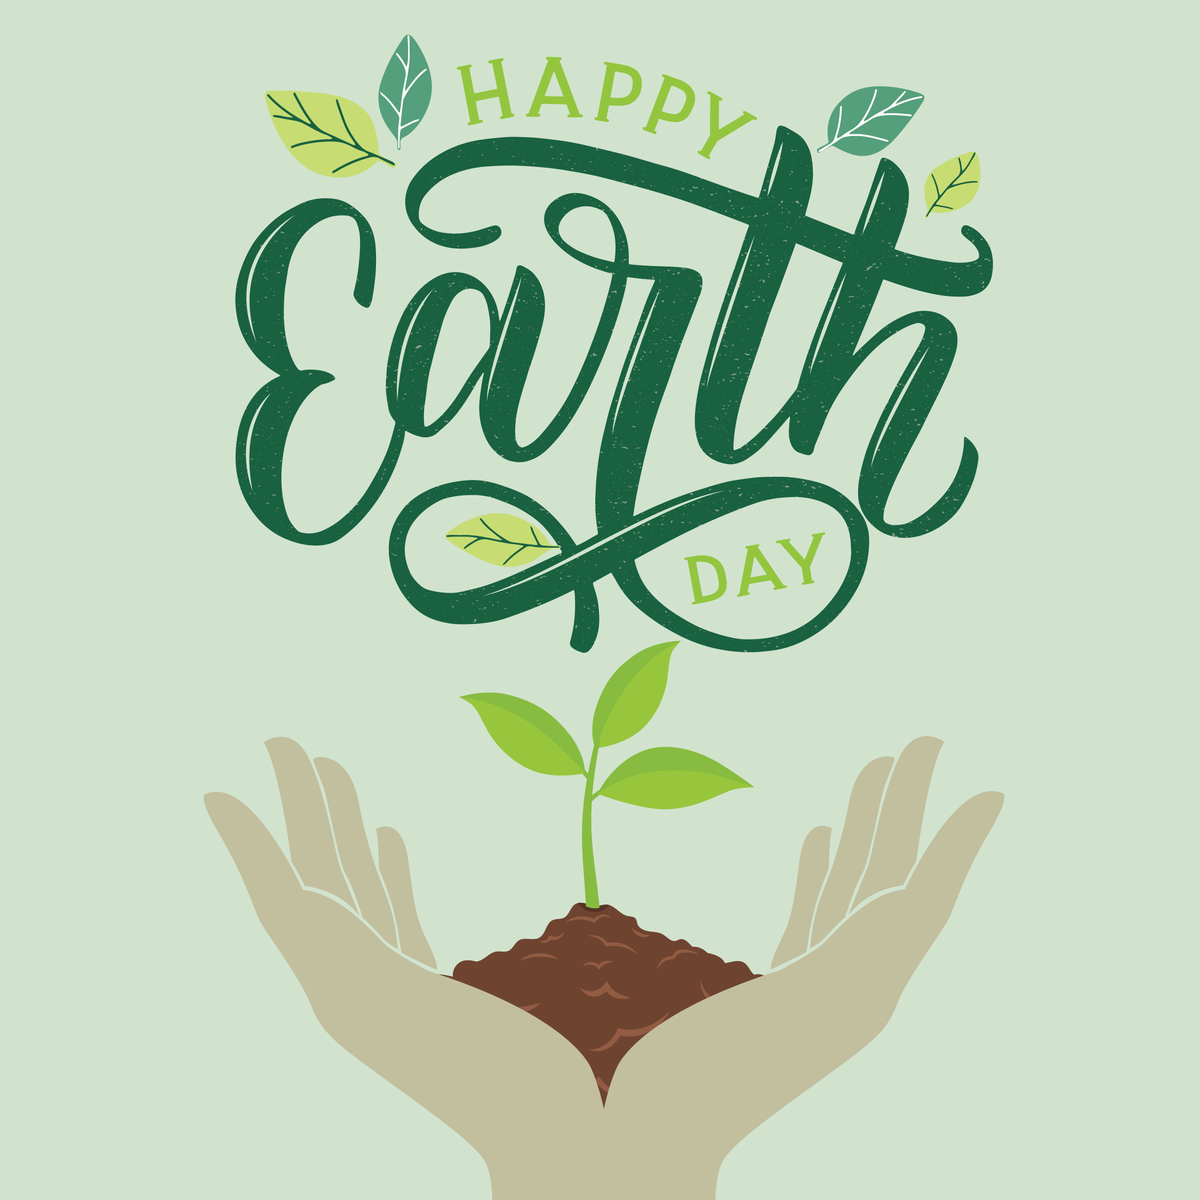 Happy Earth Day From Enduraplas 🌎🌳💧

#Enduraplas #FarmTech #Agriculture #FarmLife #AgInnovation #Agribusiness #Farming #RuralLife #Farmers #SustainableAg